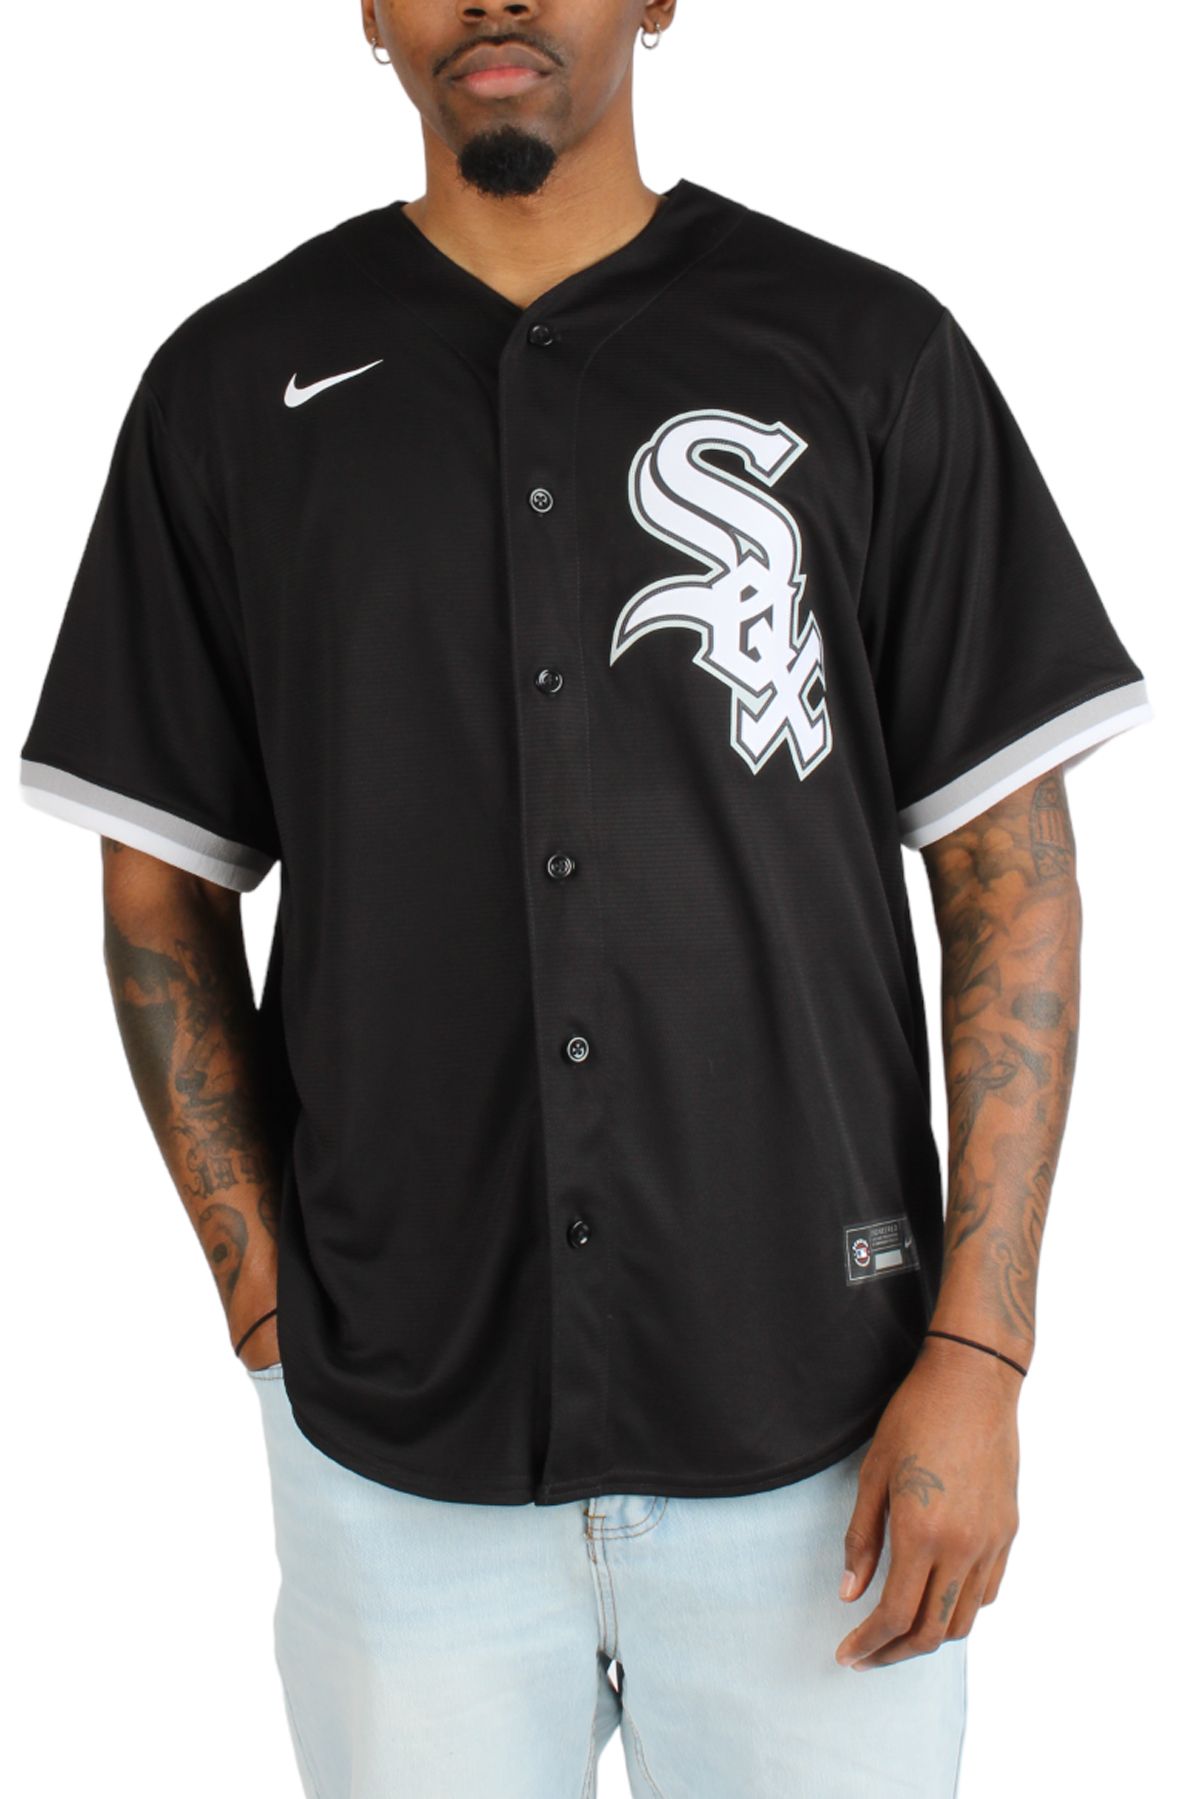 Nike Chicago White Sox KEN GRIFFEY JR Baseball Jersey BLACK